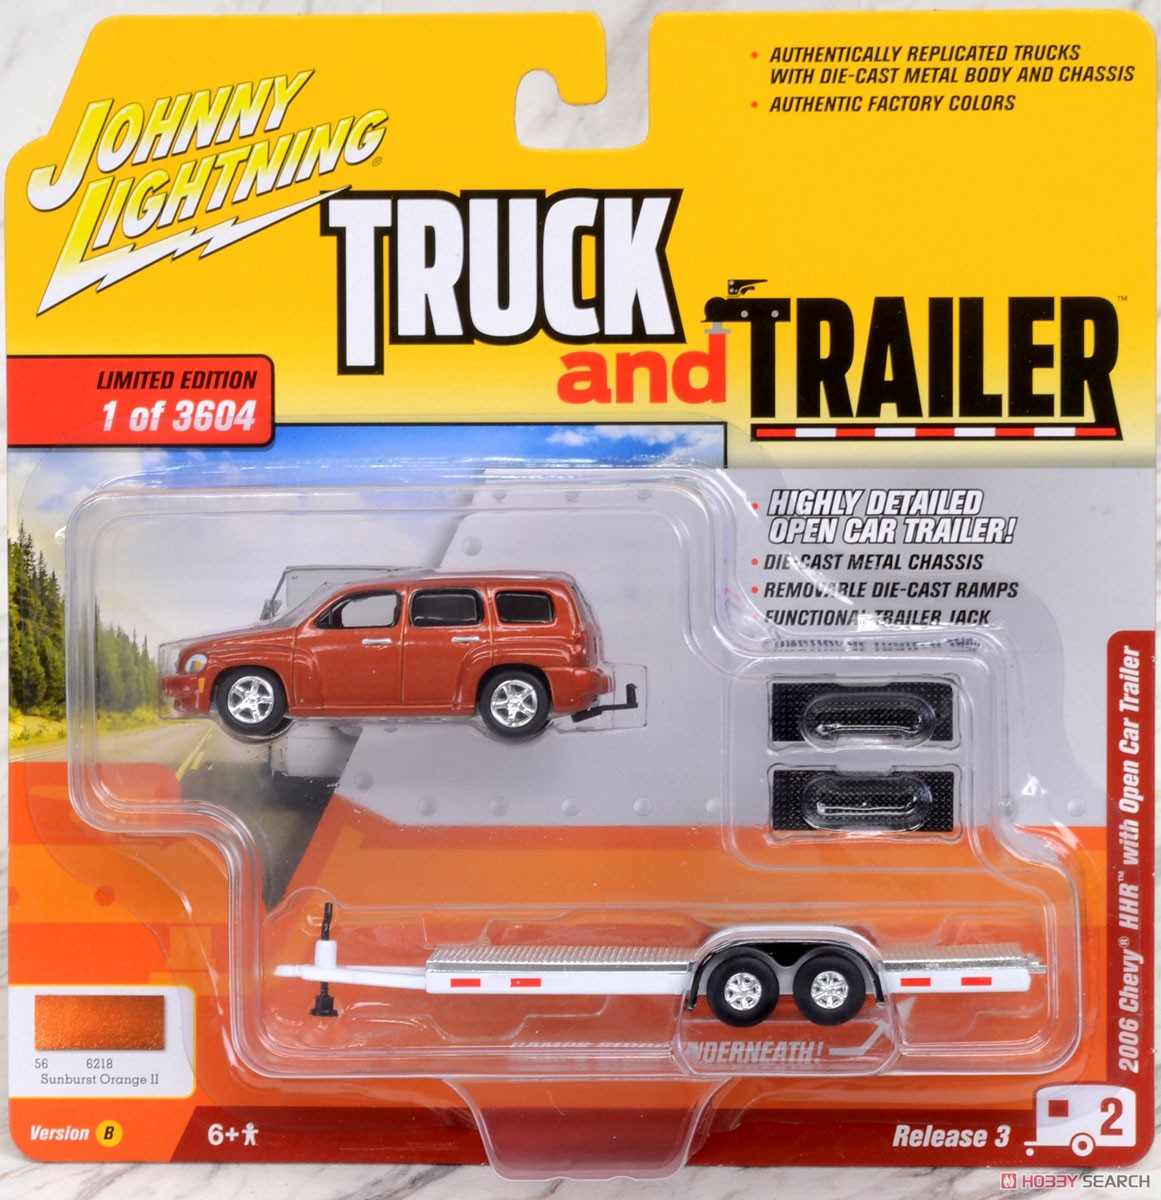 Truck and Trailer 2006 Chevy HHR with Open Car Trailer Sunburst Orange II (ミニカー) パッケージ1